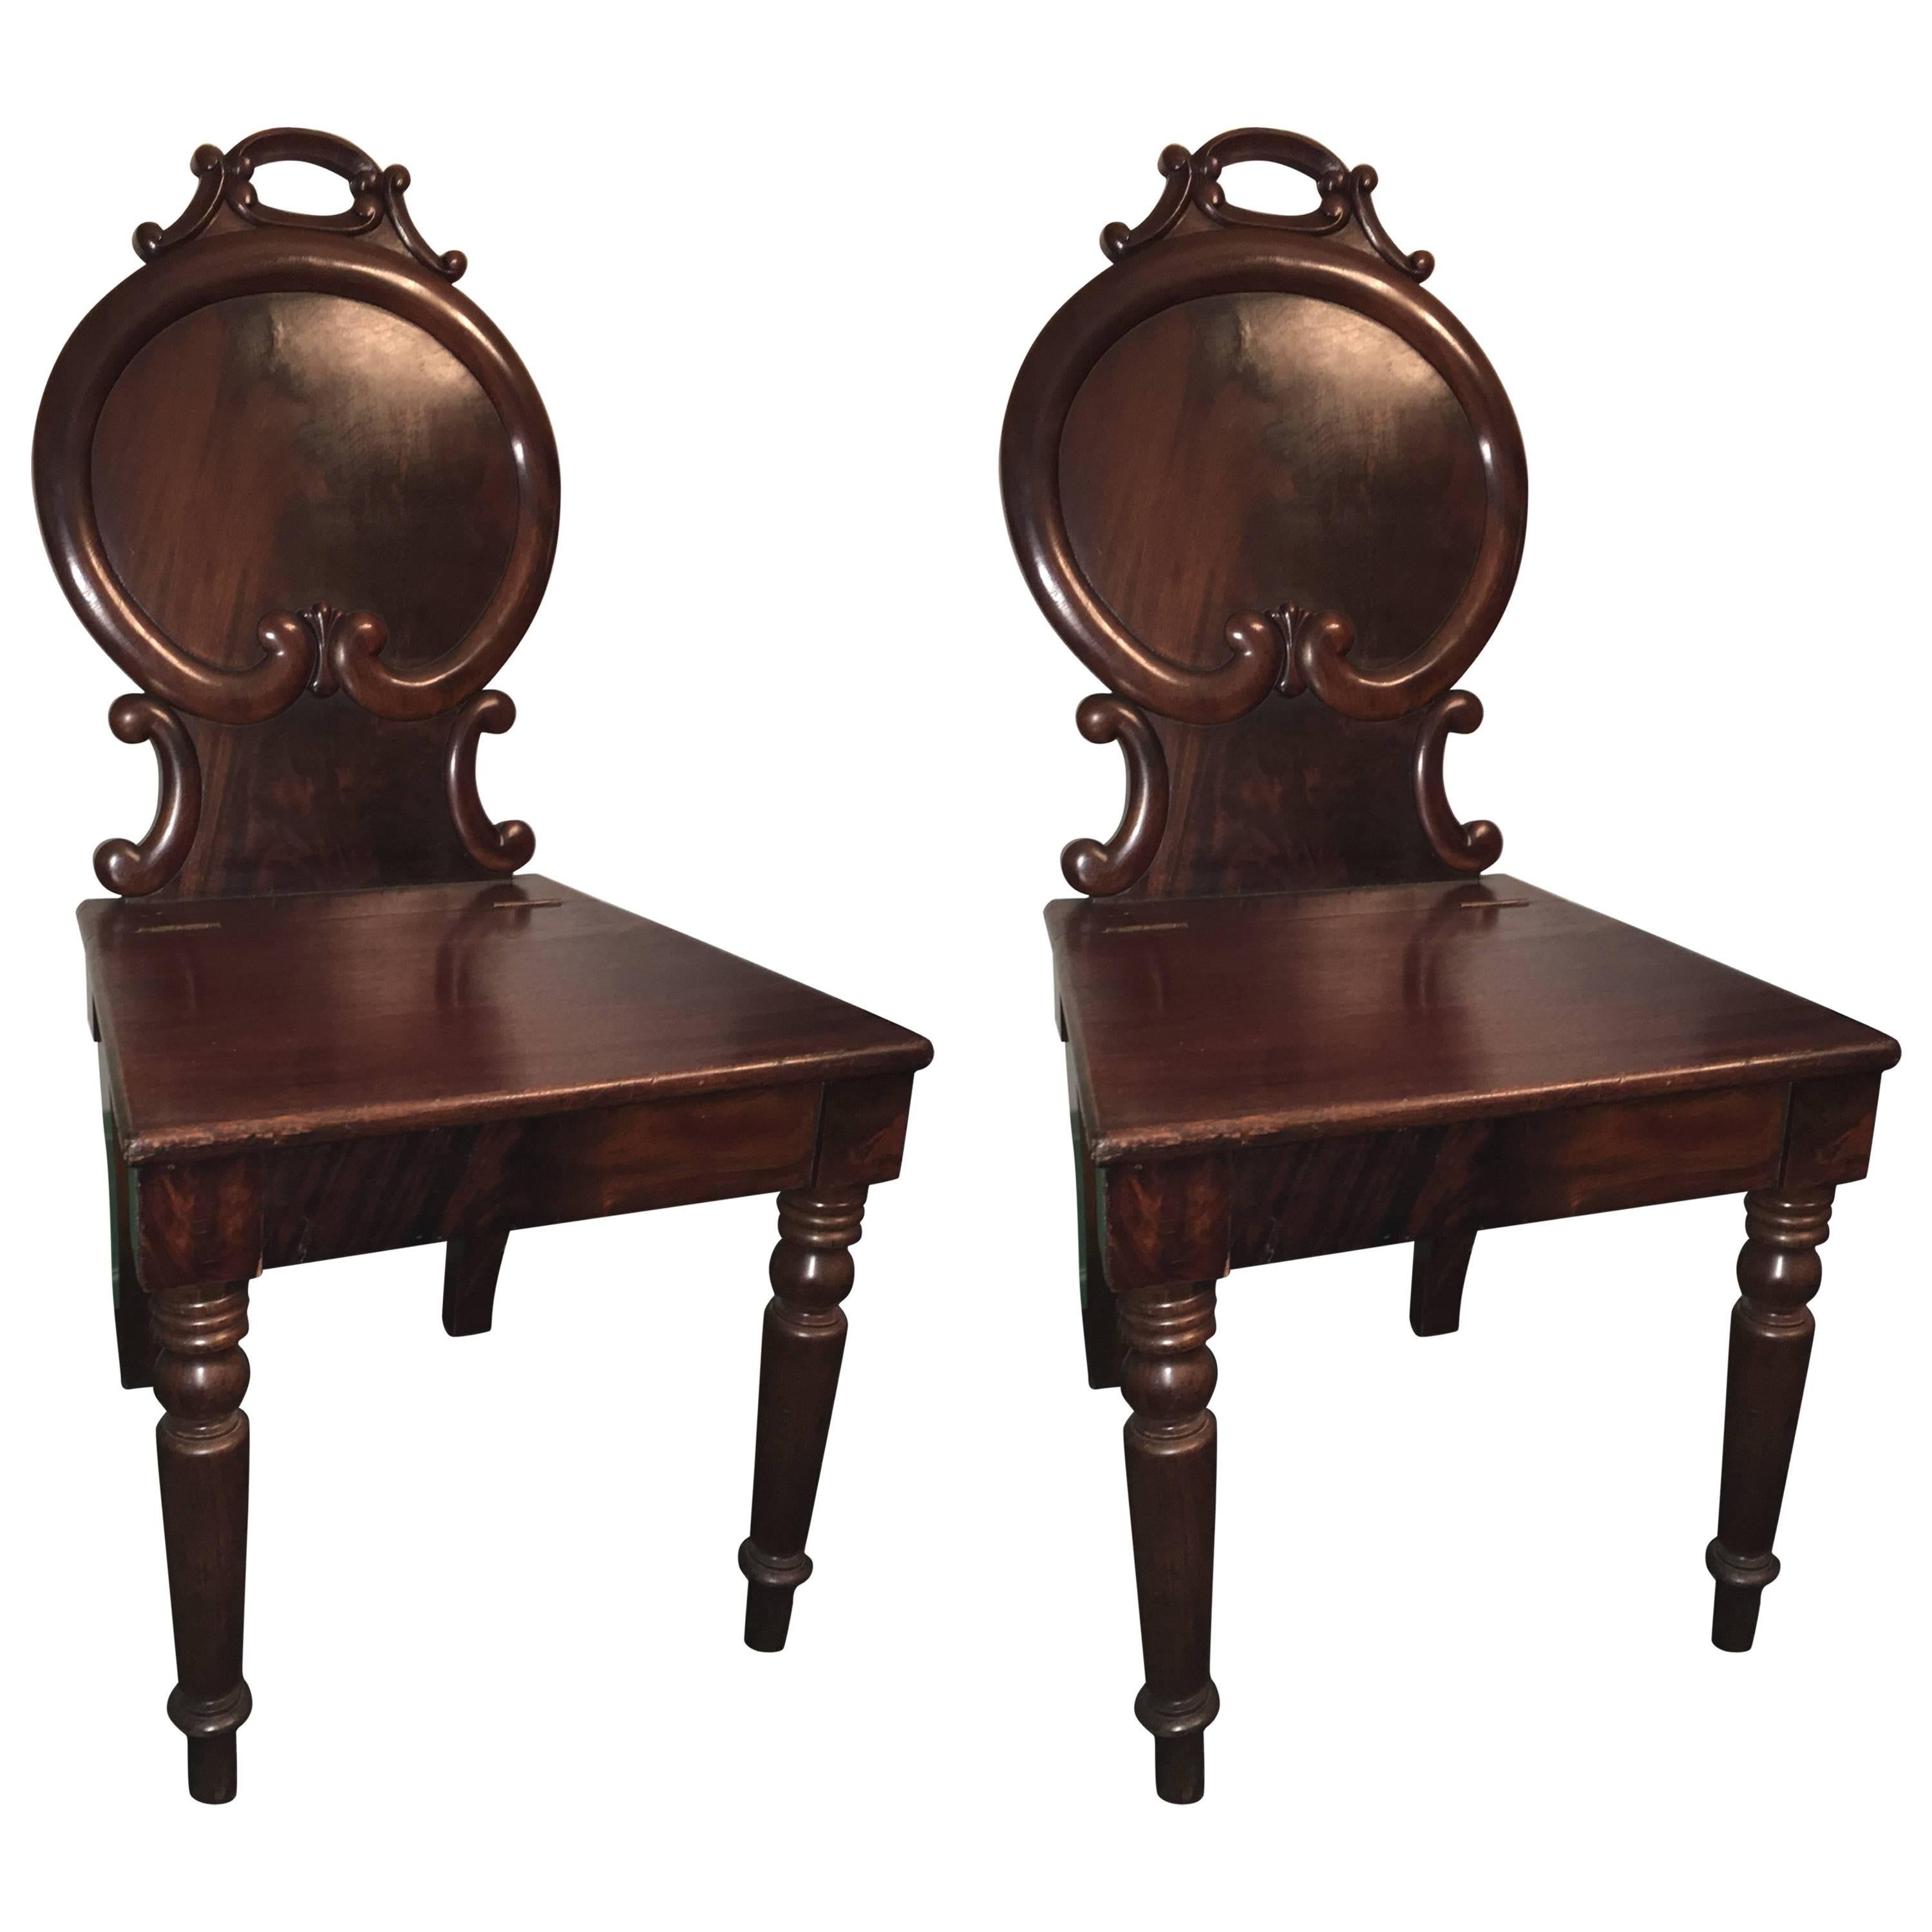 Pair of English Regency Mahogany Hall Chairs, circa 1850